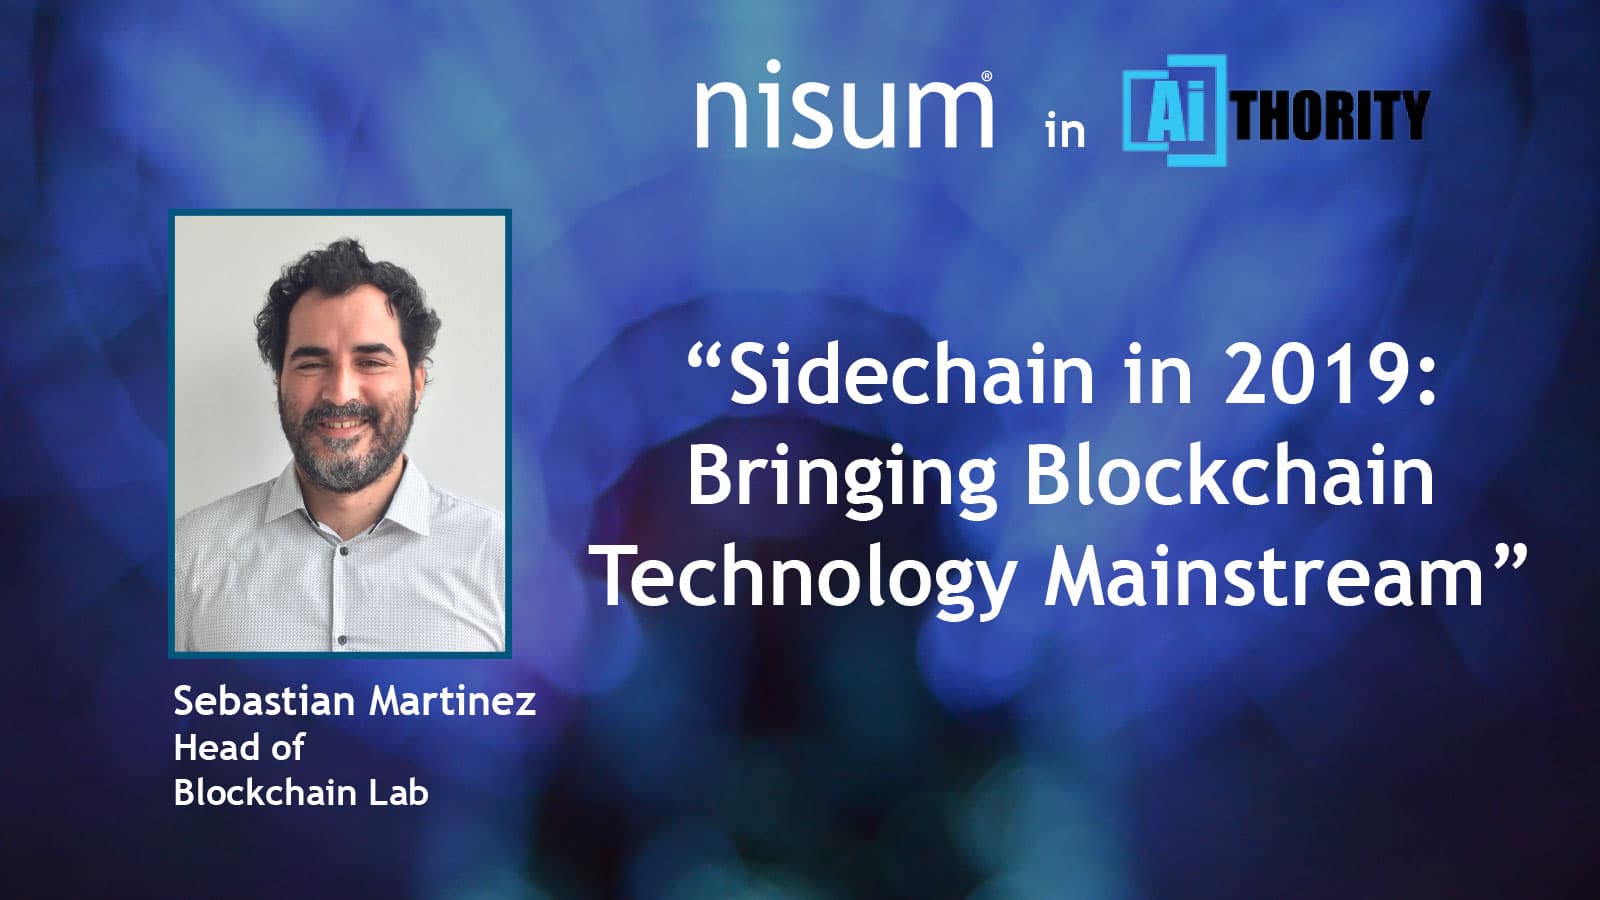 head-nisum-blockchain-lab-explains-sidechain-bringing-blockchain-technology-mainstream-aithority